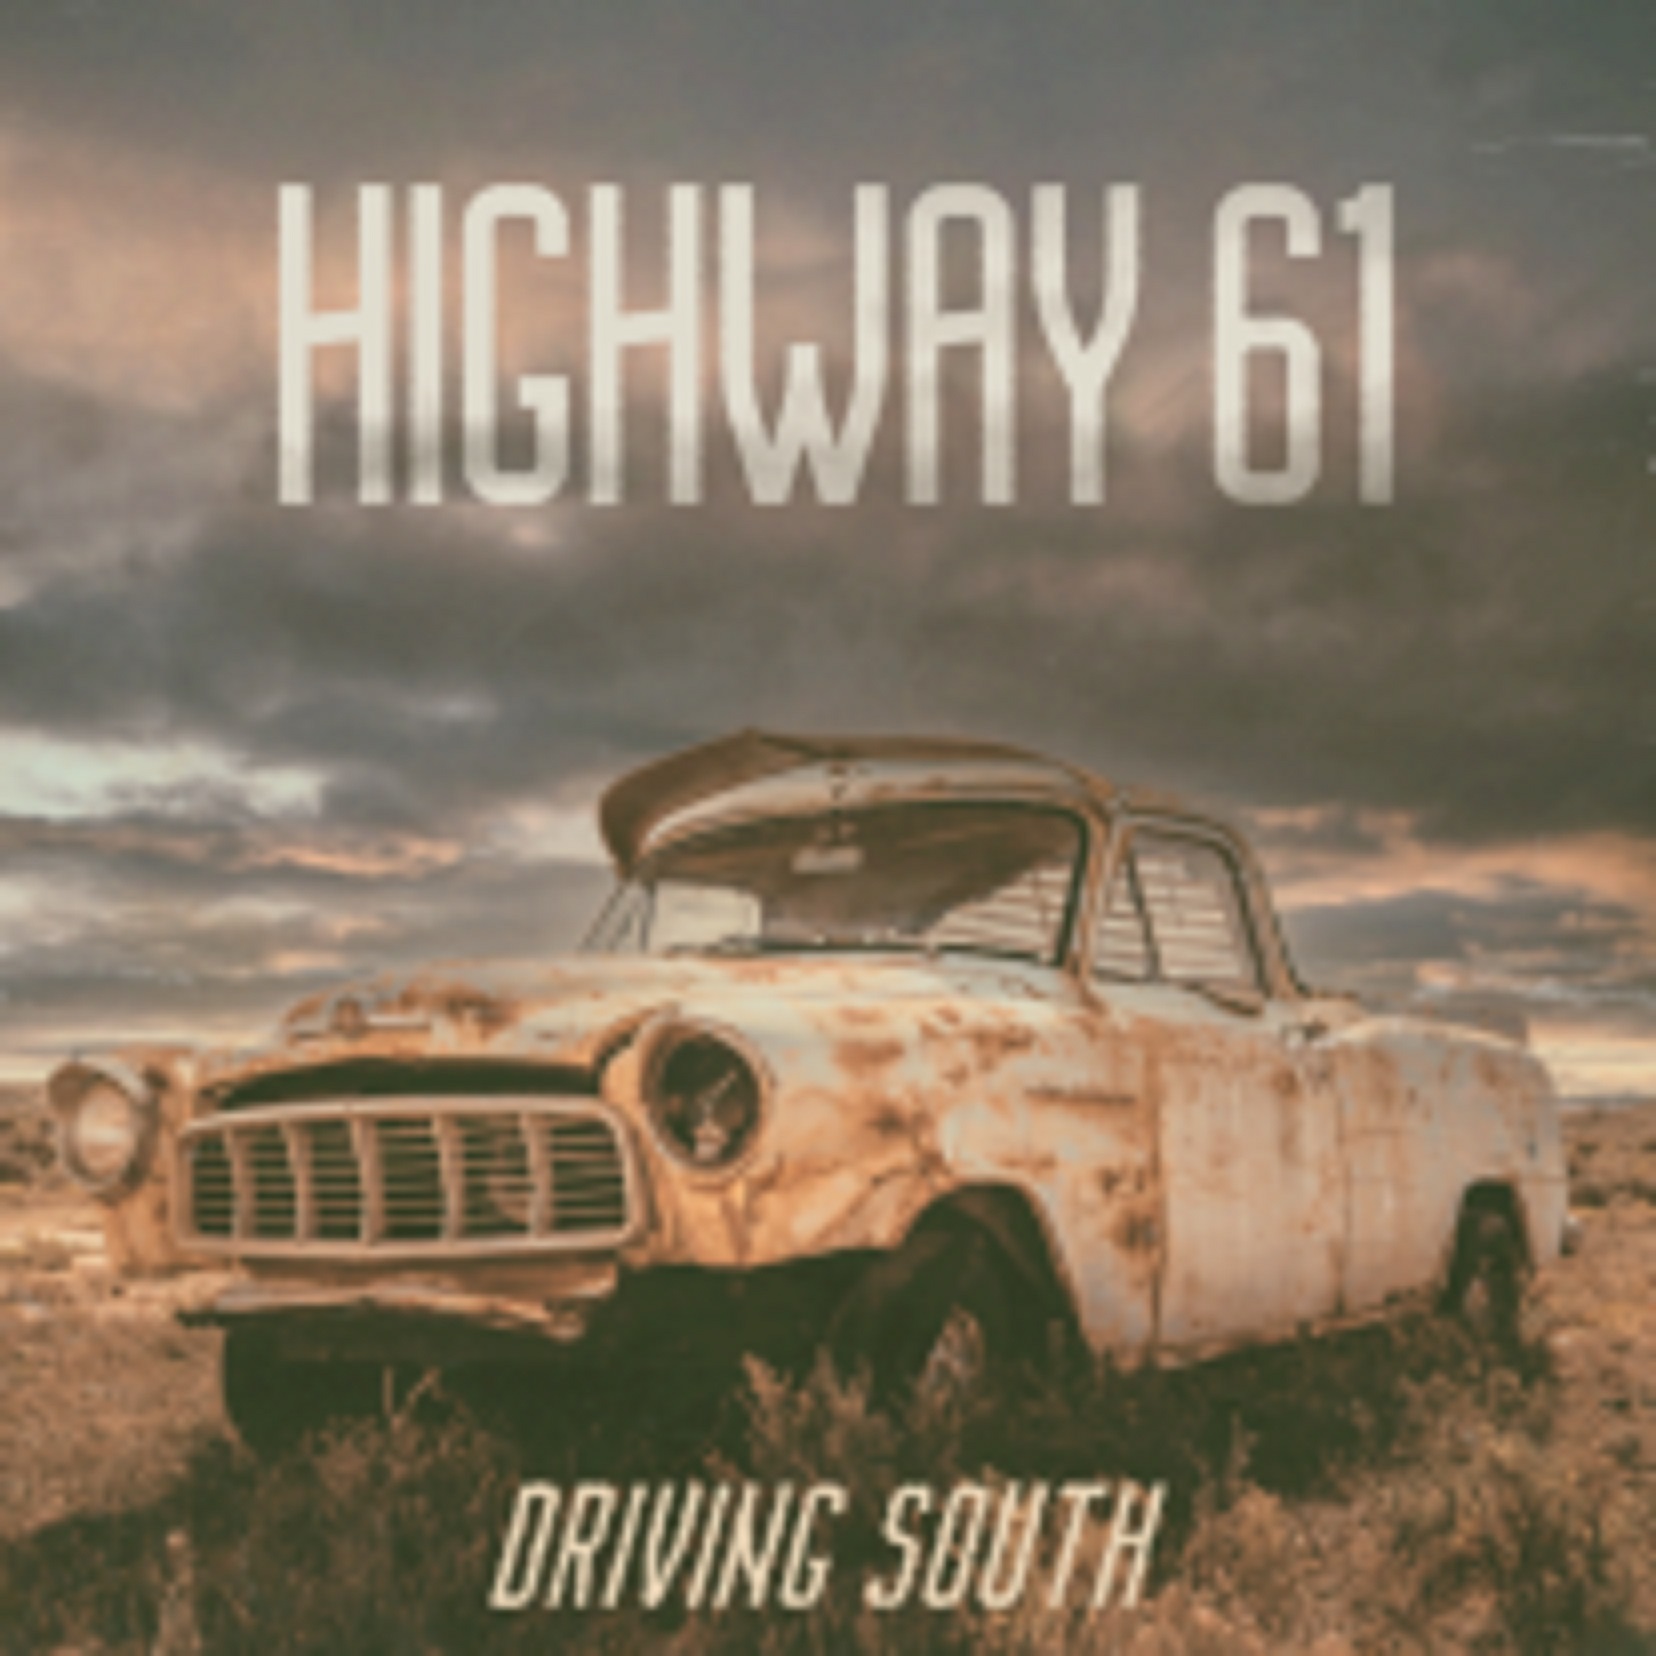 Frank Meyer & Highway 61 release 'Stranger' single & video from their debut album